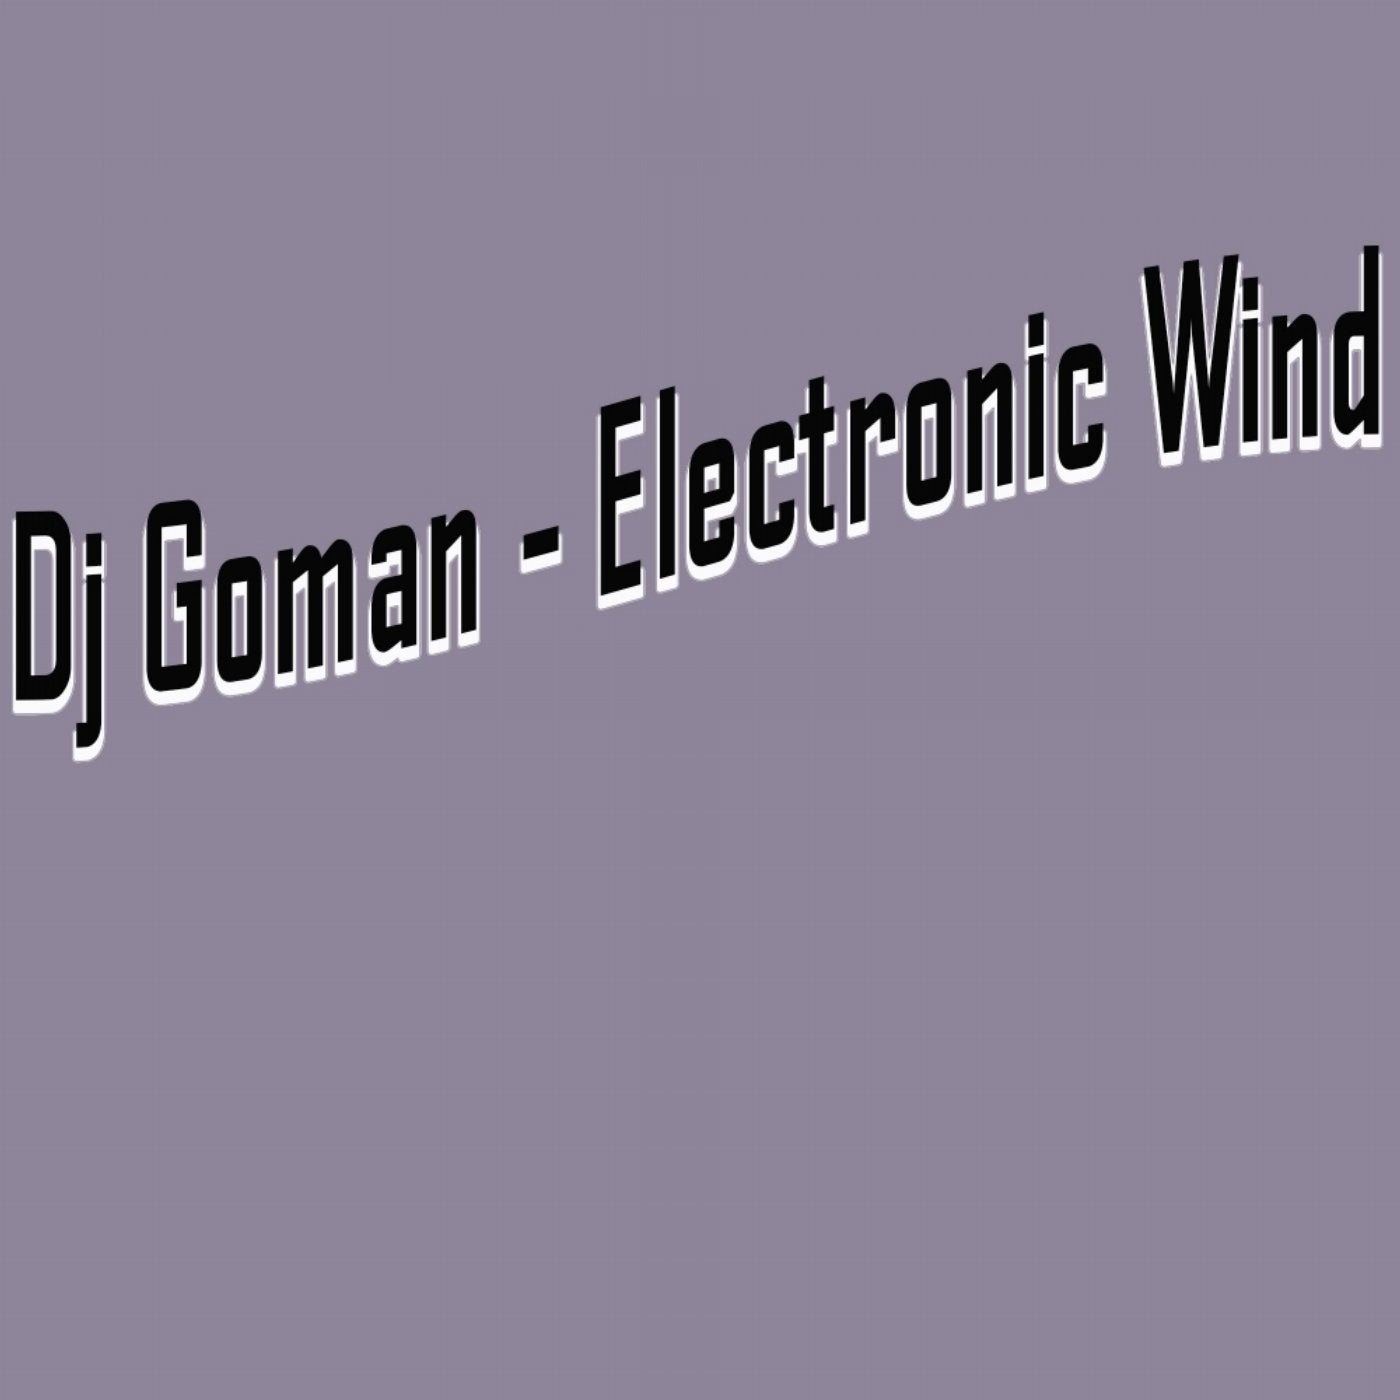 Electronic Wind